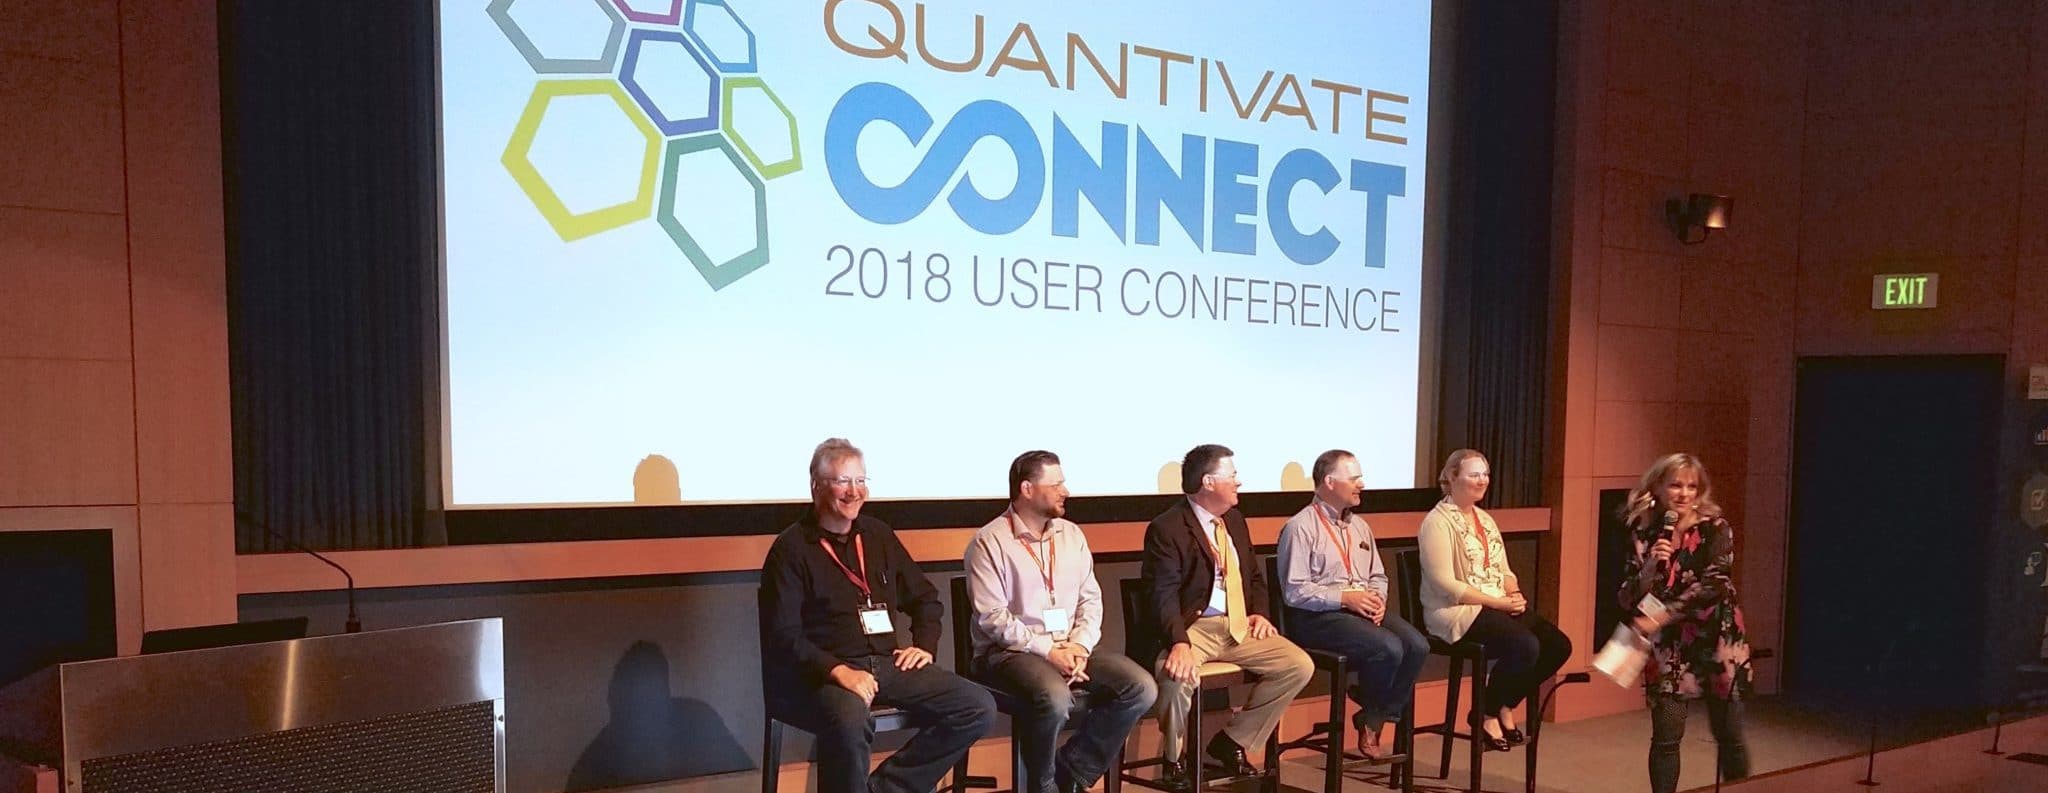 Quantivate user conference